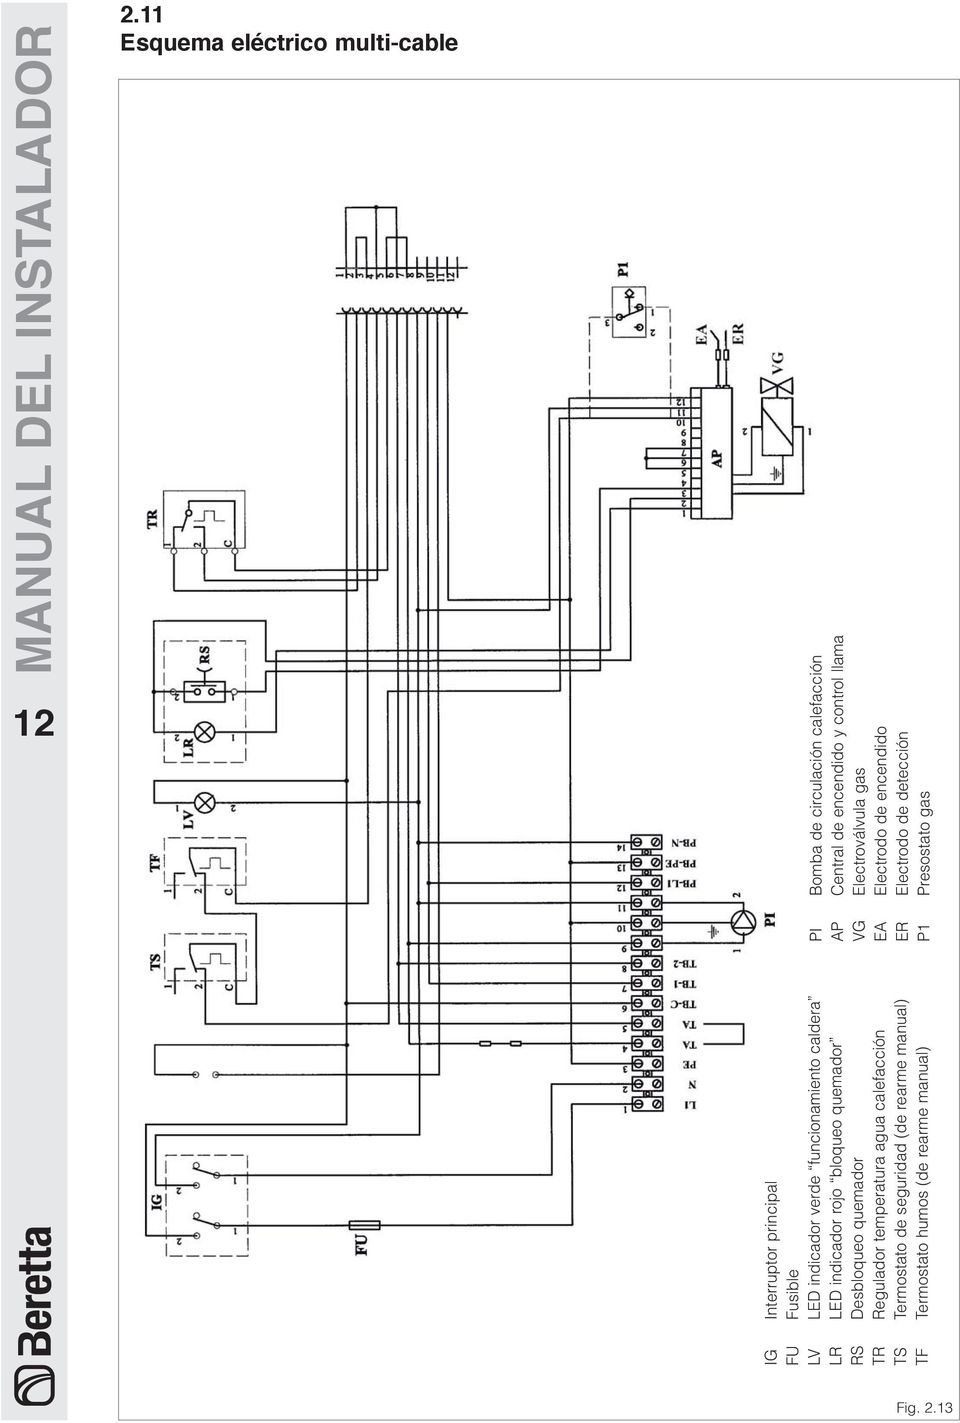 gas EA Electrodo de encendido ER Electrodo de detección P1 Presostato gas IG Interruptor principal FU Fusible LV LED indicador